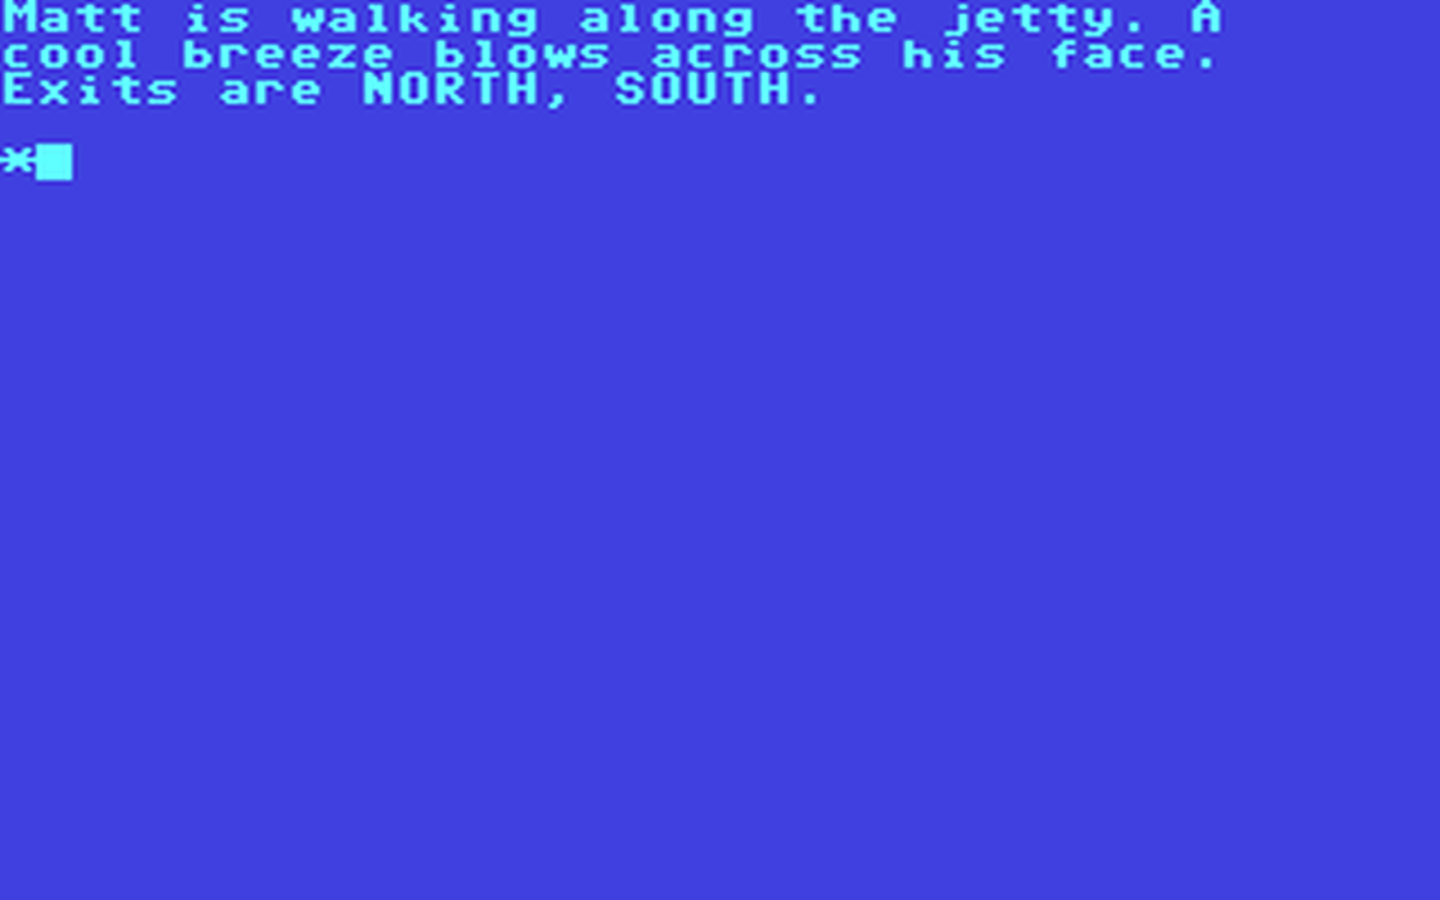 C64 GameBase Matt_Lucas_-_Florida_Private_Investigator Players_Software 1987